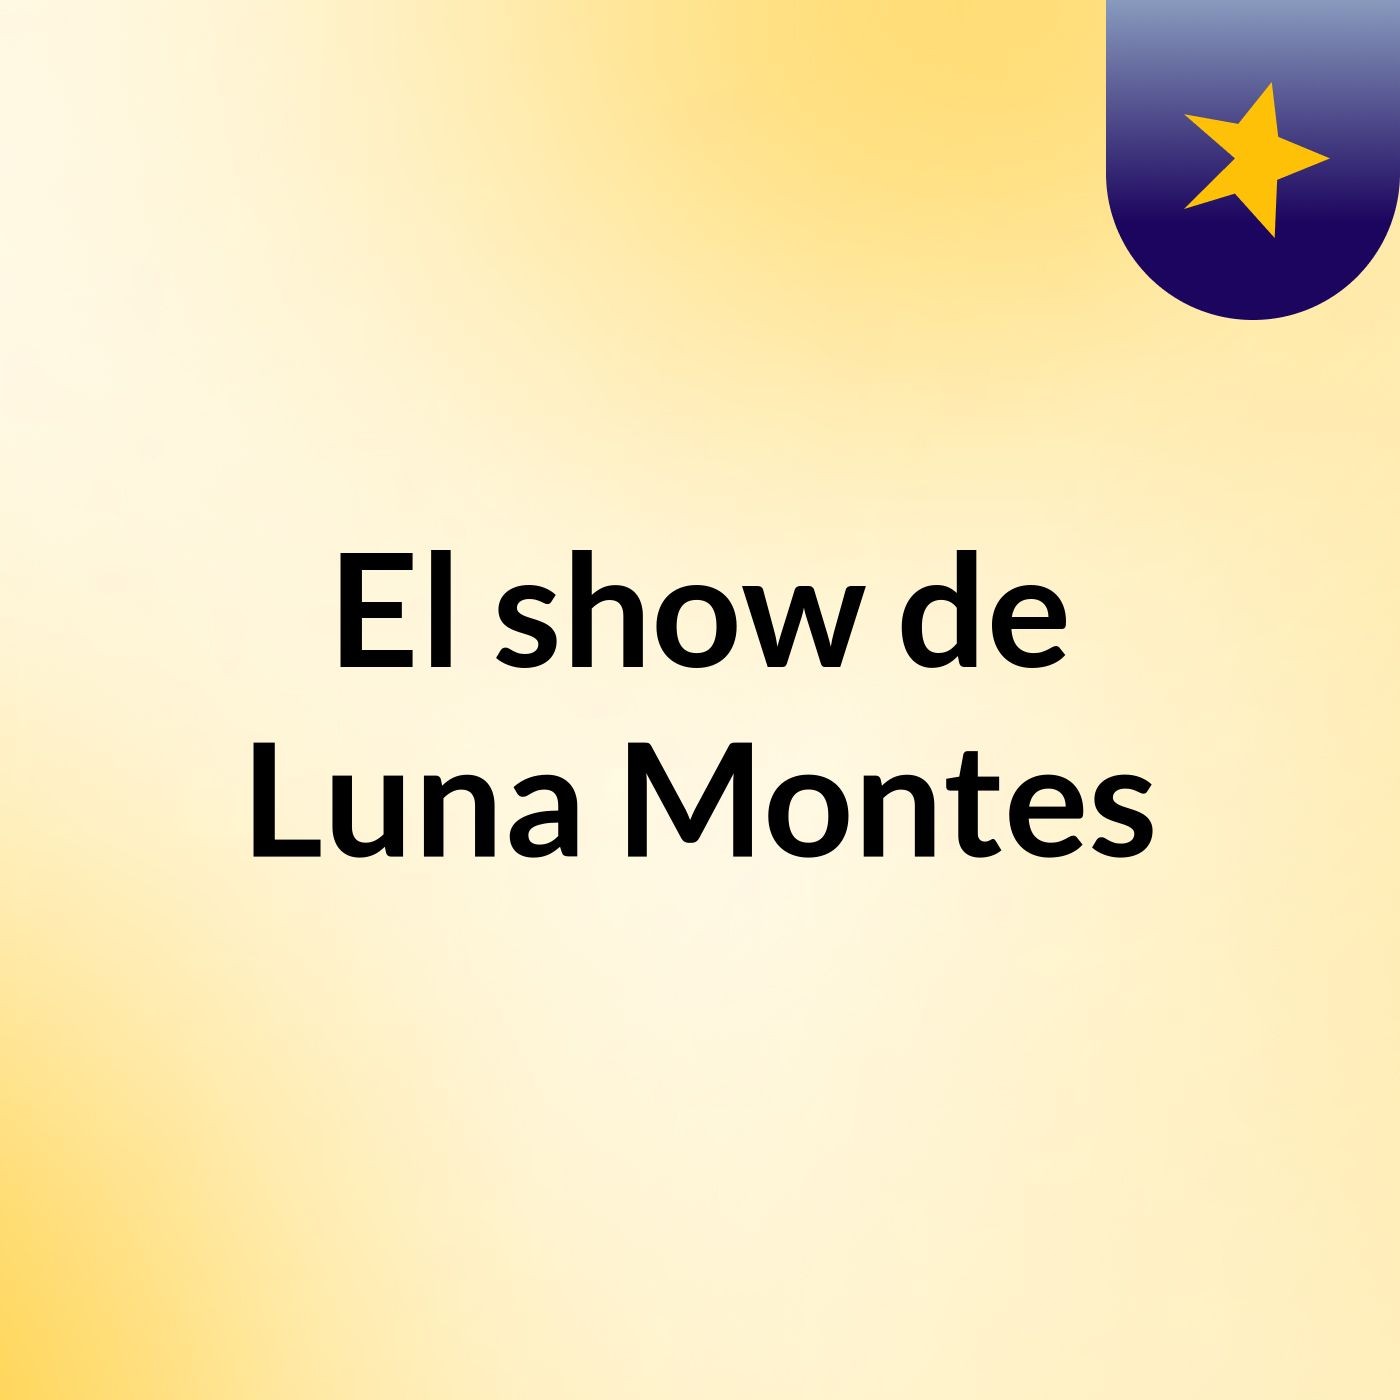 El show de Luna Montes